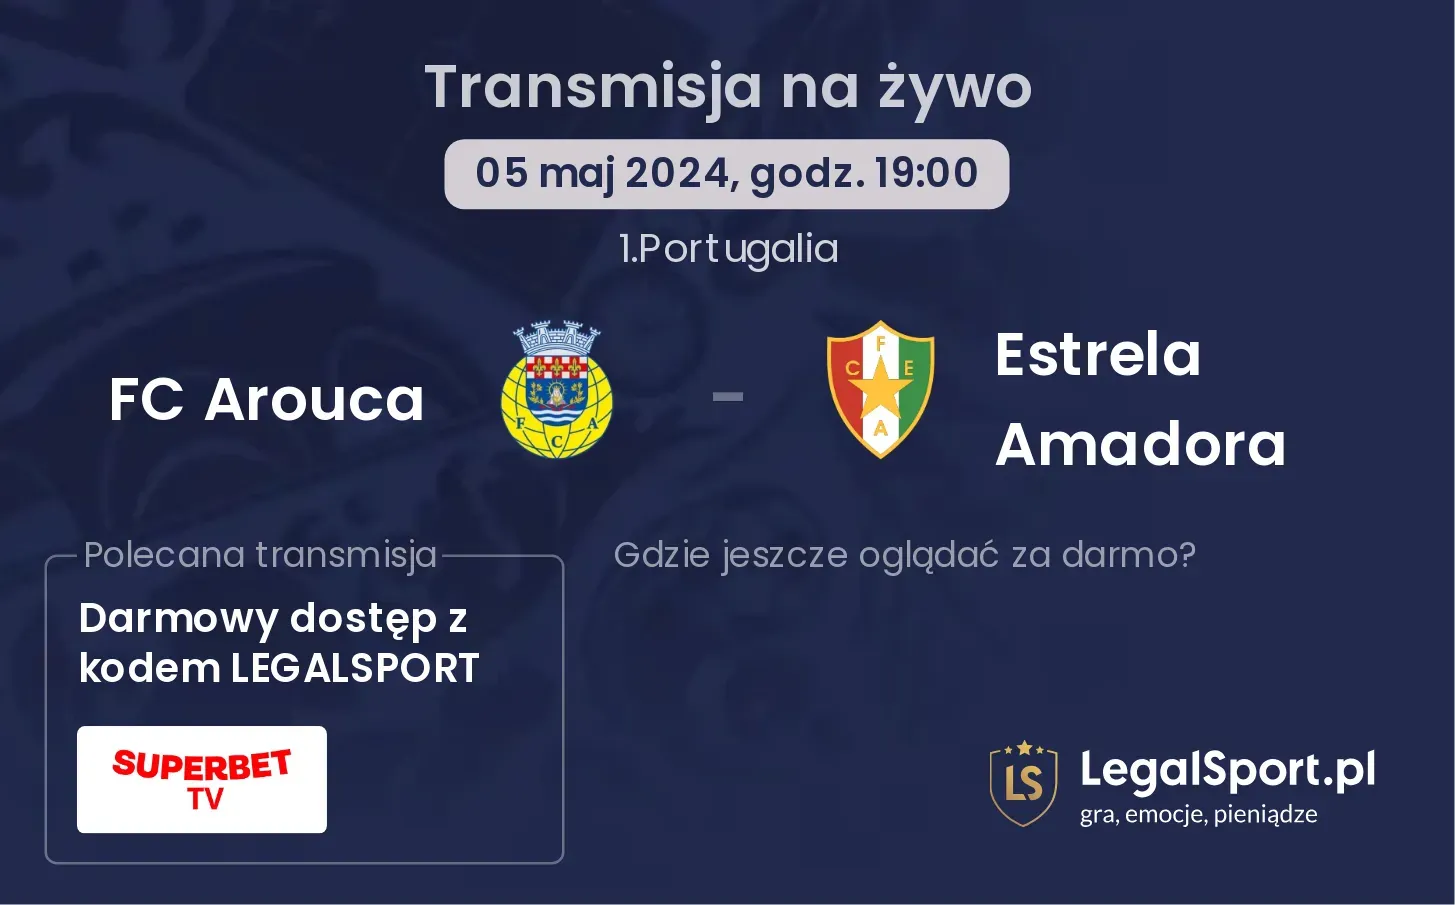 FC Arouca - Estrela Amadora transmisja na żywo